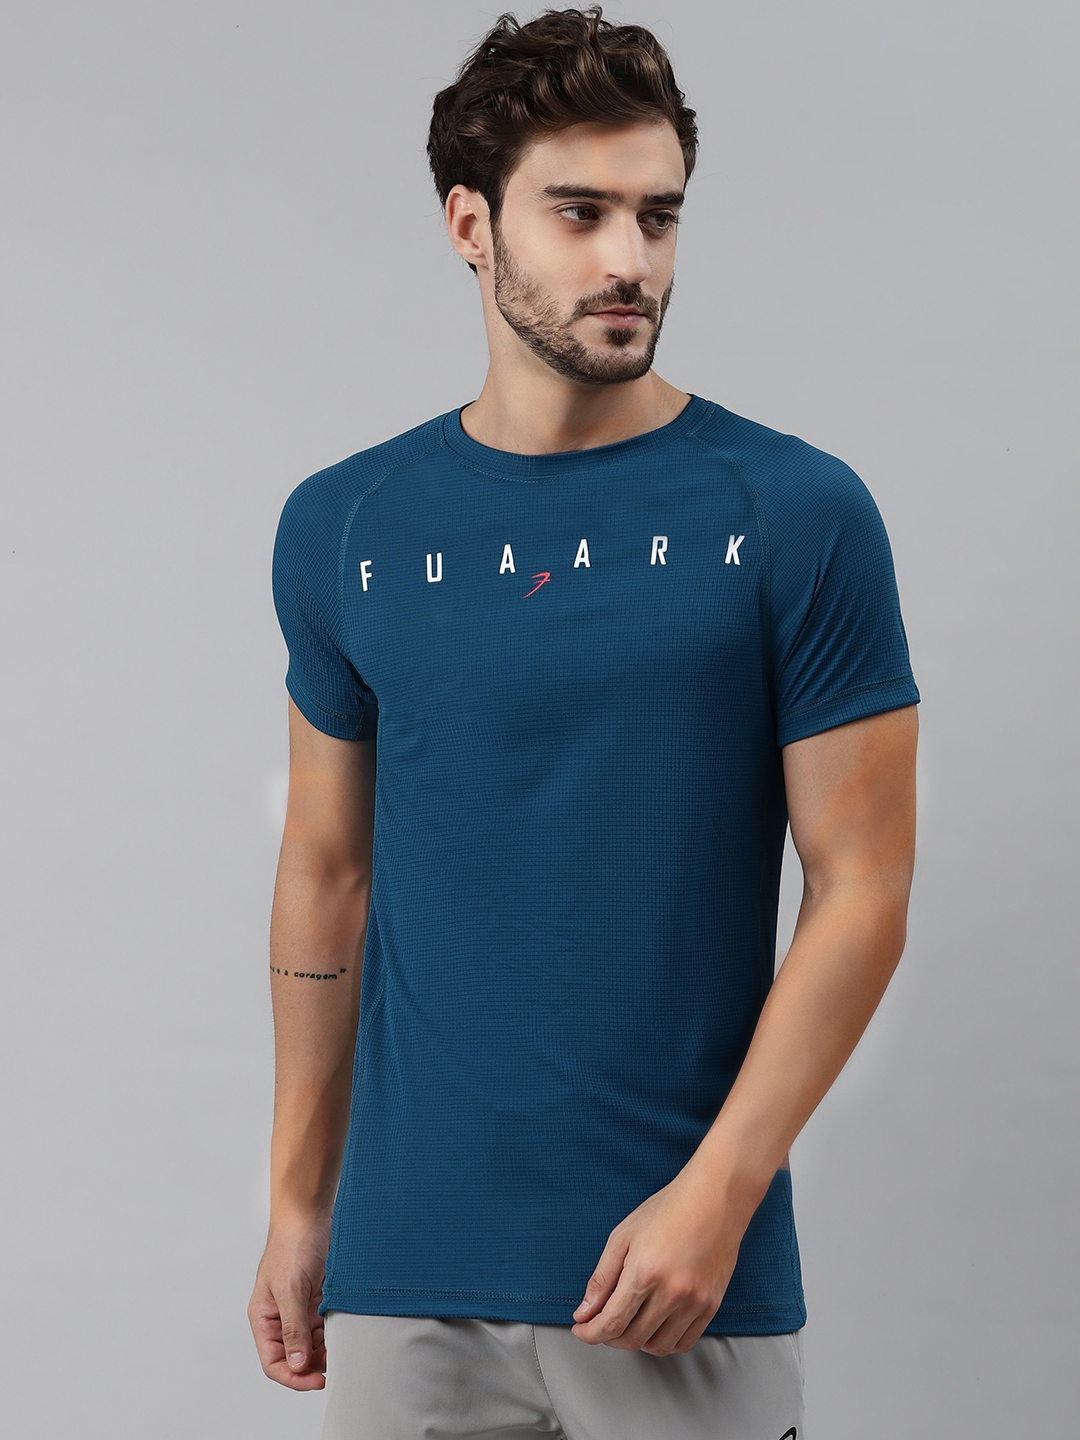 Buy FUAARK Men Teal Blue & White Brand Logo Print Slim Fit Round Neck T ...